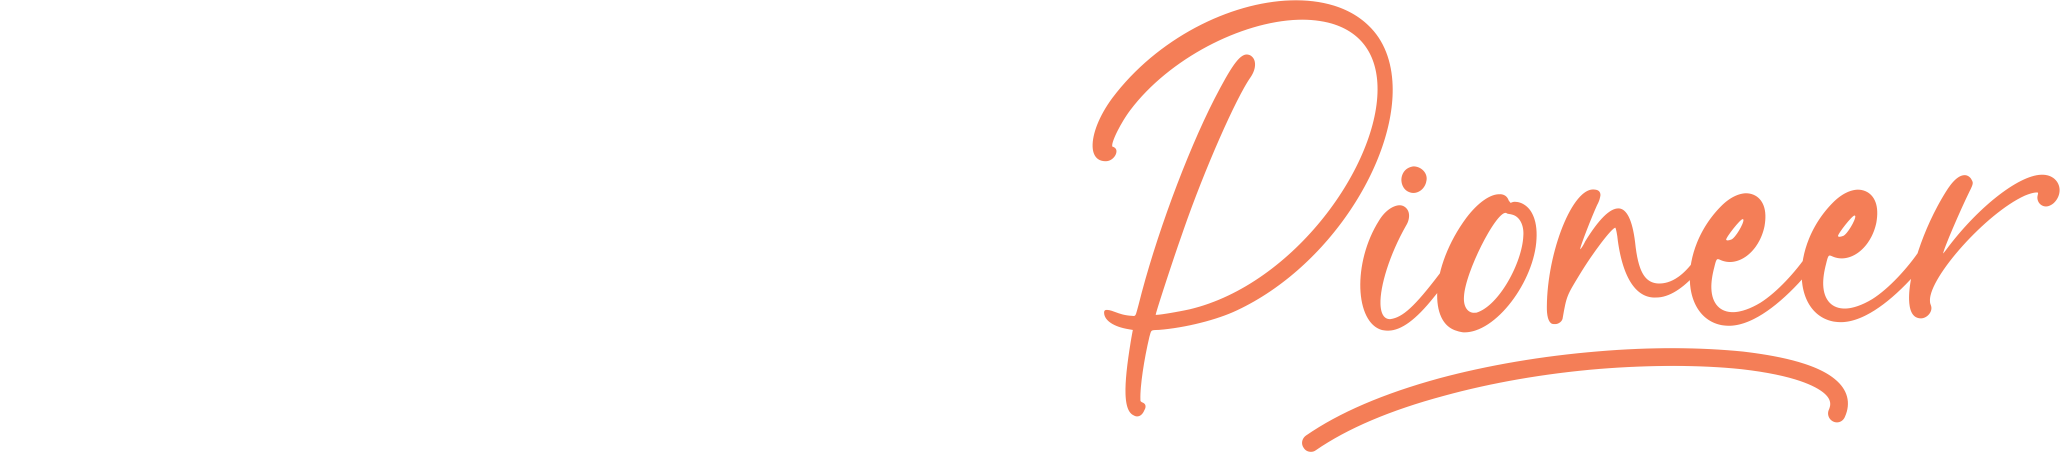 Amazon Pioneer- logo-white